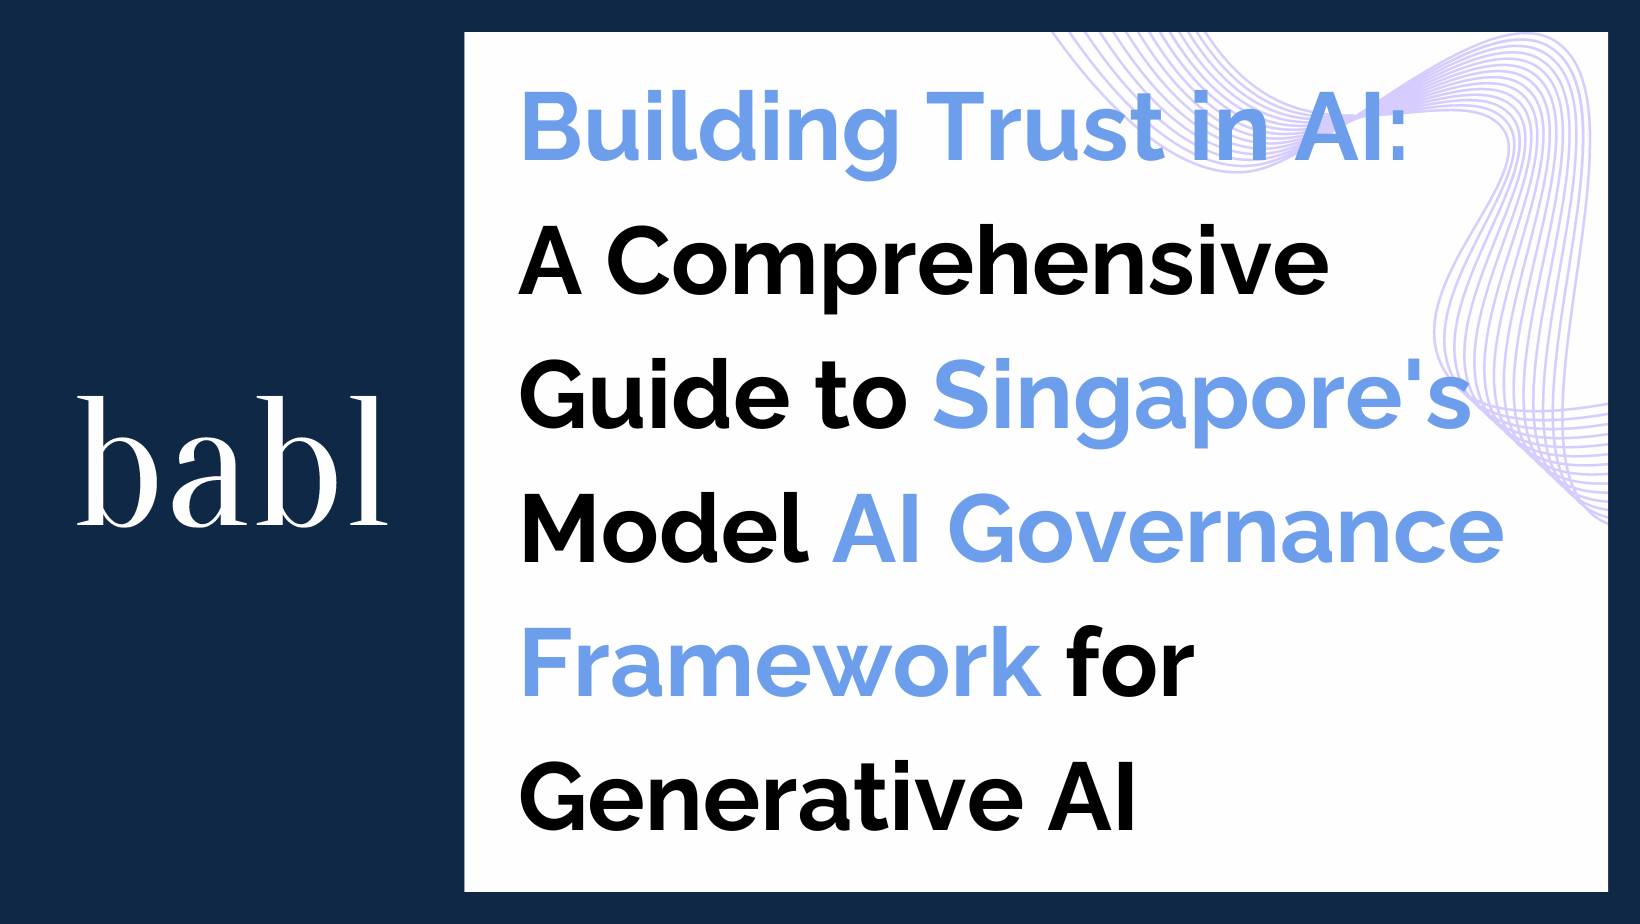 Building Trust in AI: A Comprehensive Guide to Singapore’s Model AI Governance Framework for Generative AI